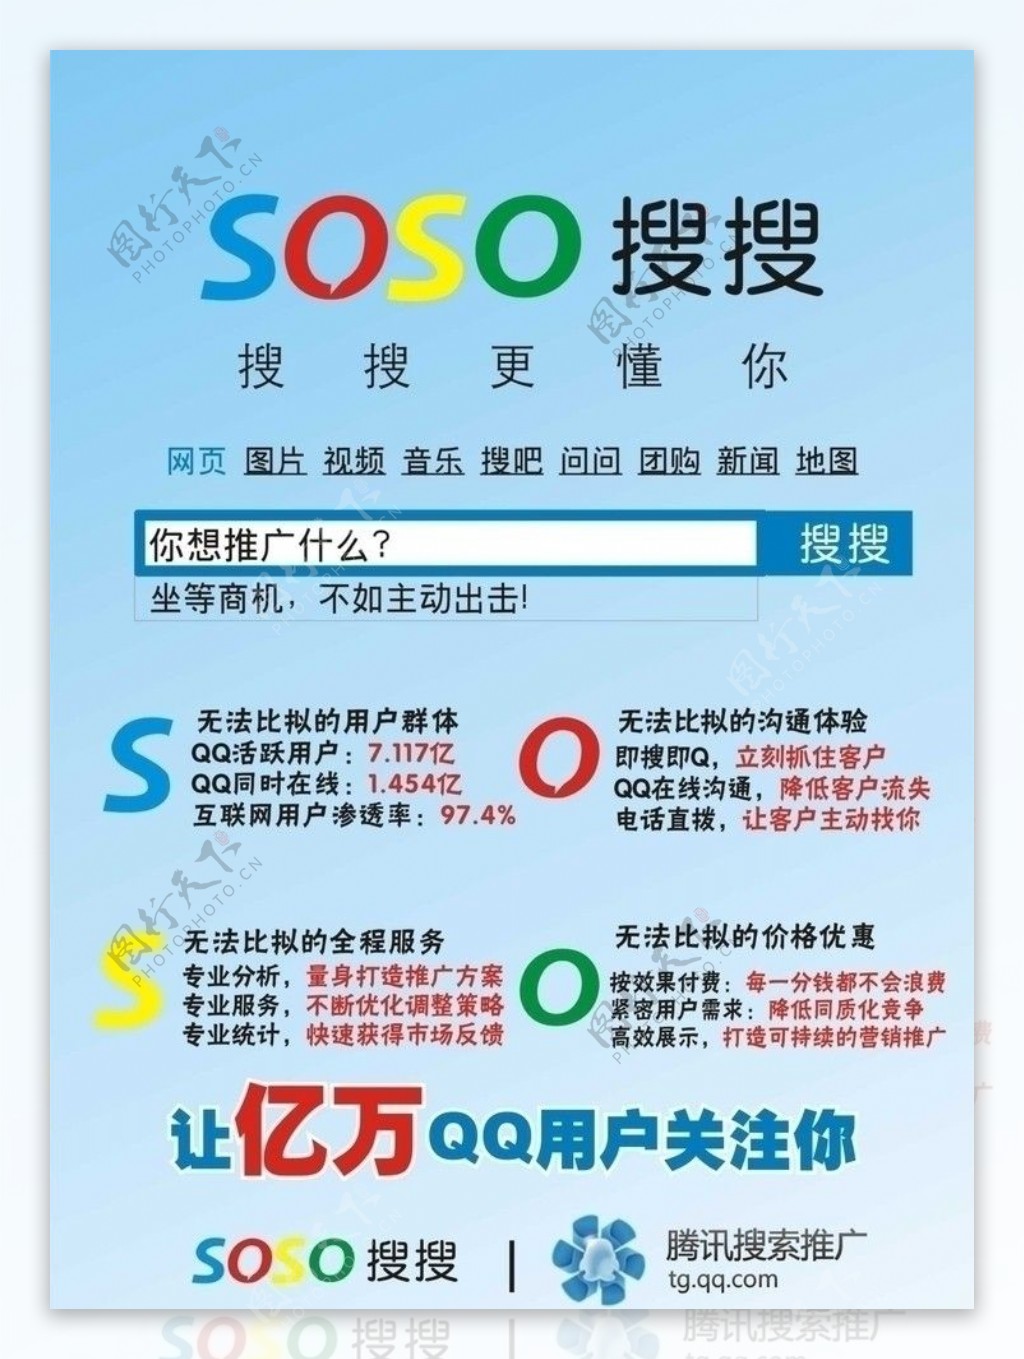 SOSO推广计划图片